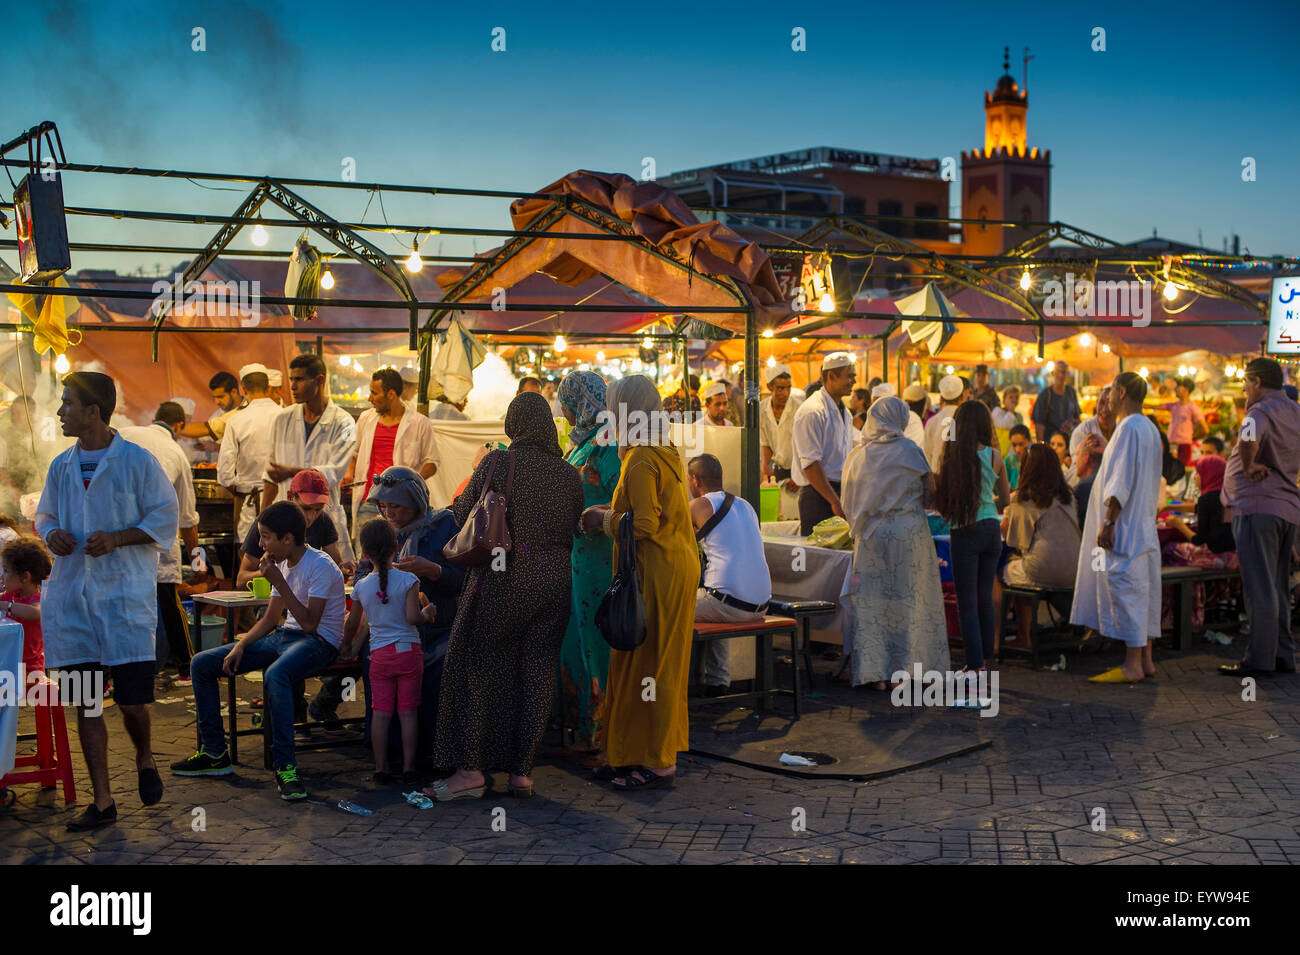 Les gens de stands de nourriture, Place Djemaa el Fna, UNESCO World Heritage site, Marrakech, Maroc Banque D'Images